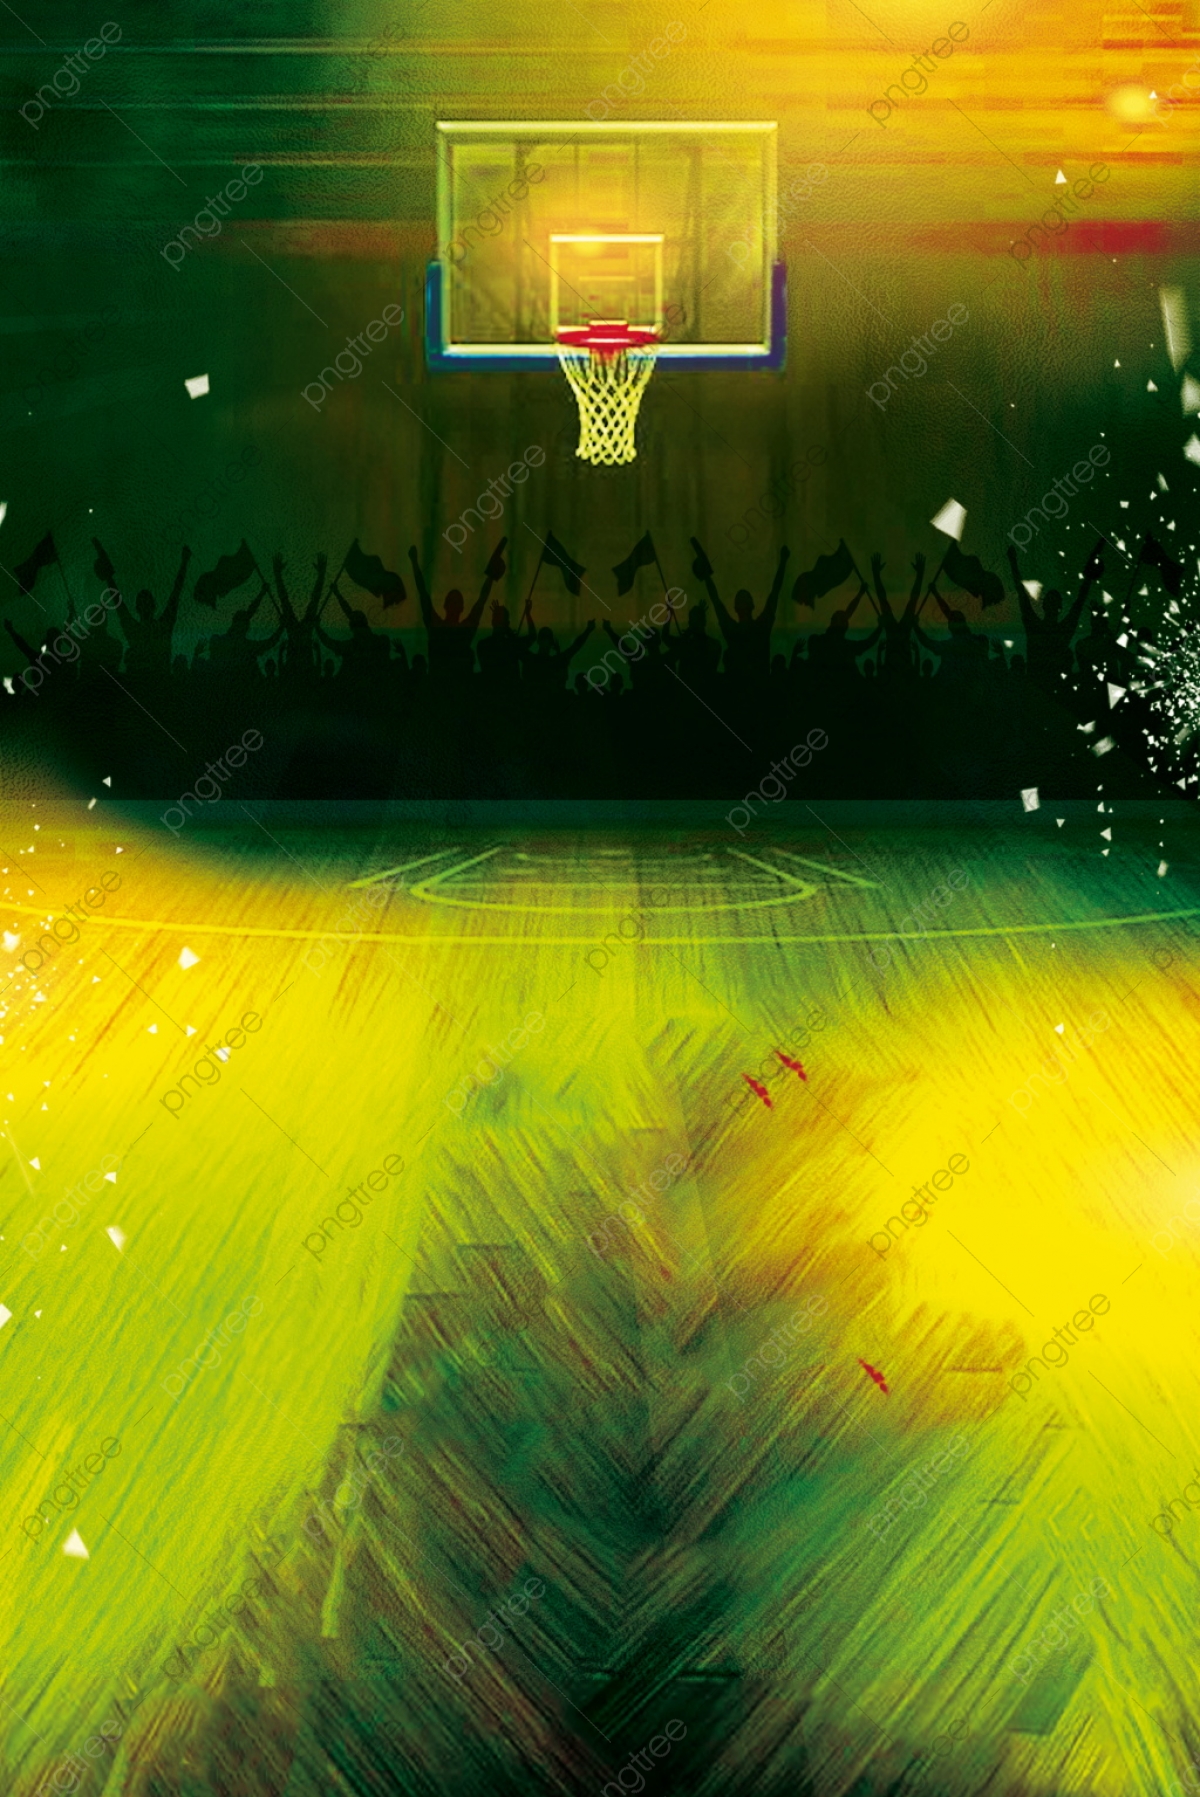 Basketball Background Hd